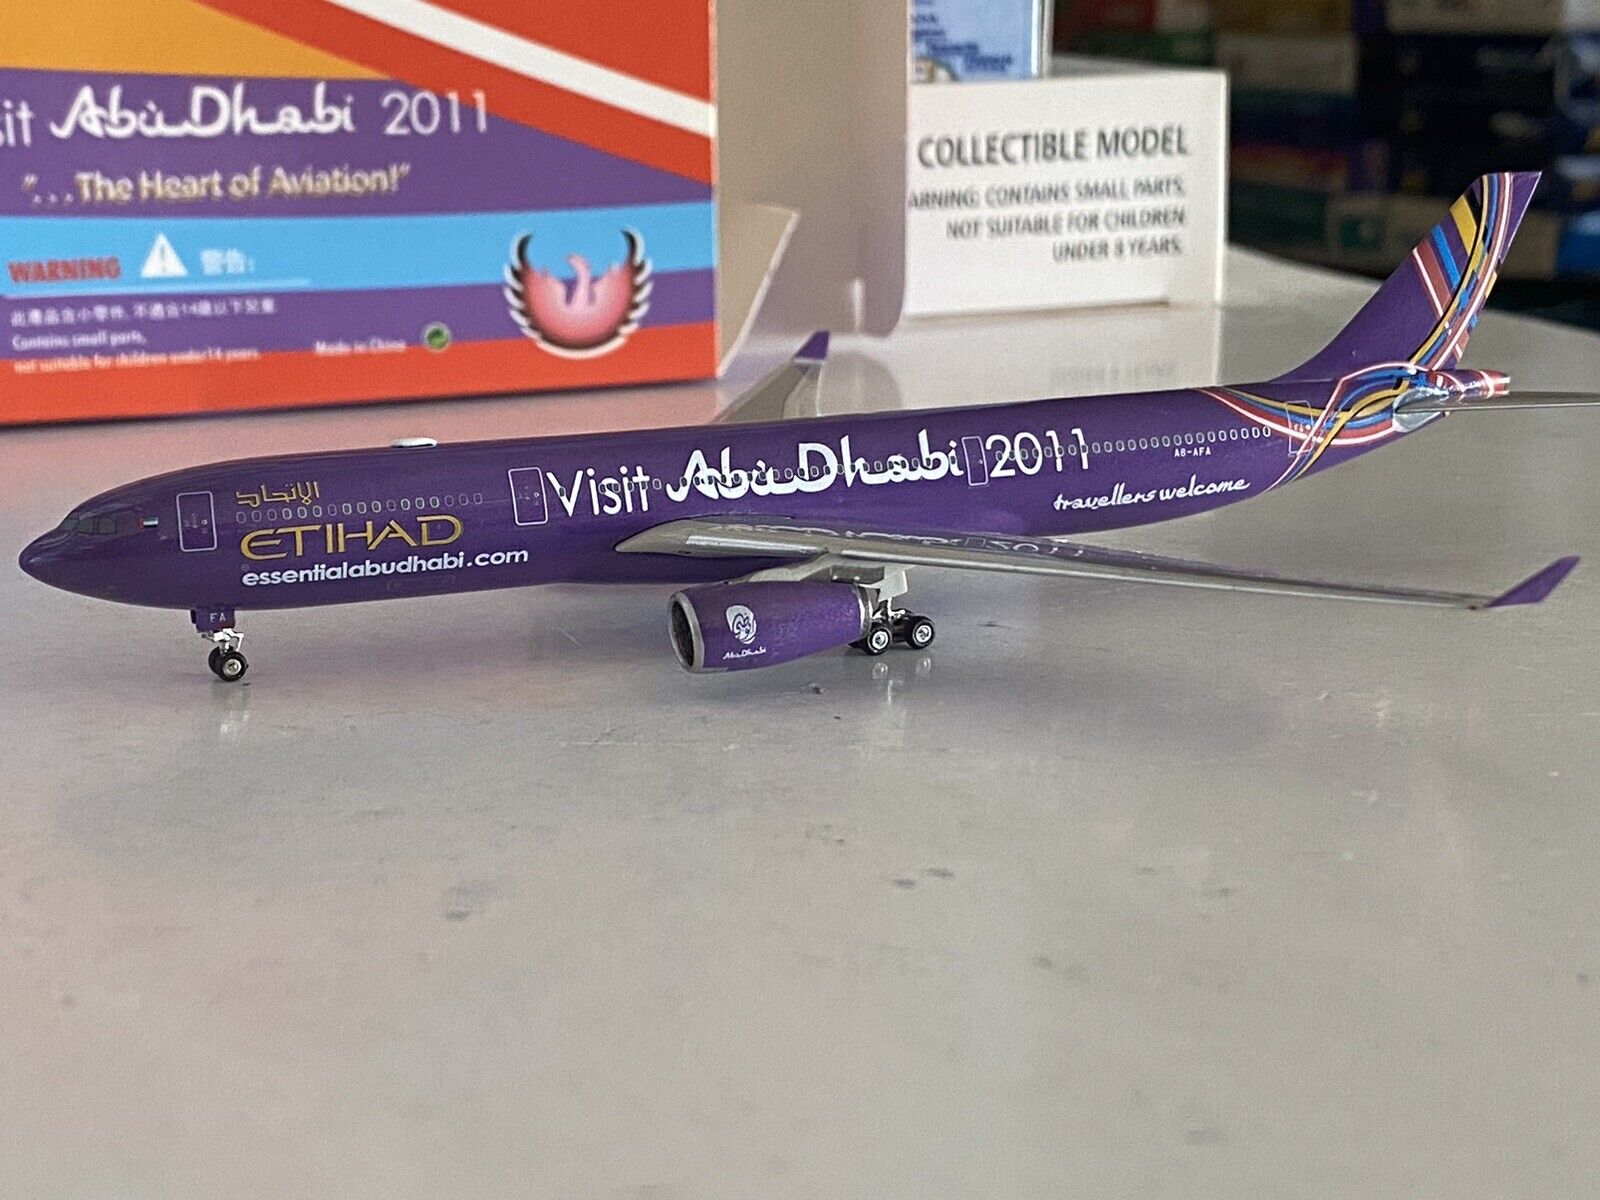 Phoenix Models Etihad Airbus A330-300 1:400 A6-AFA Visit Abu Dhabi